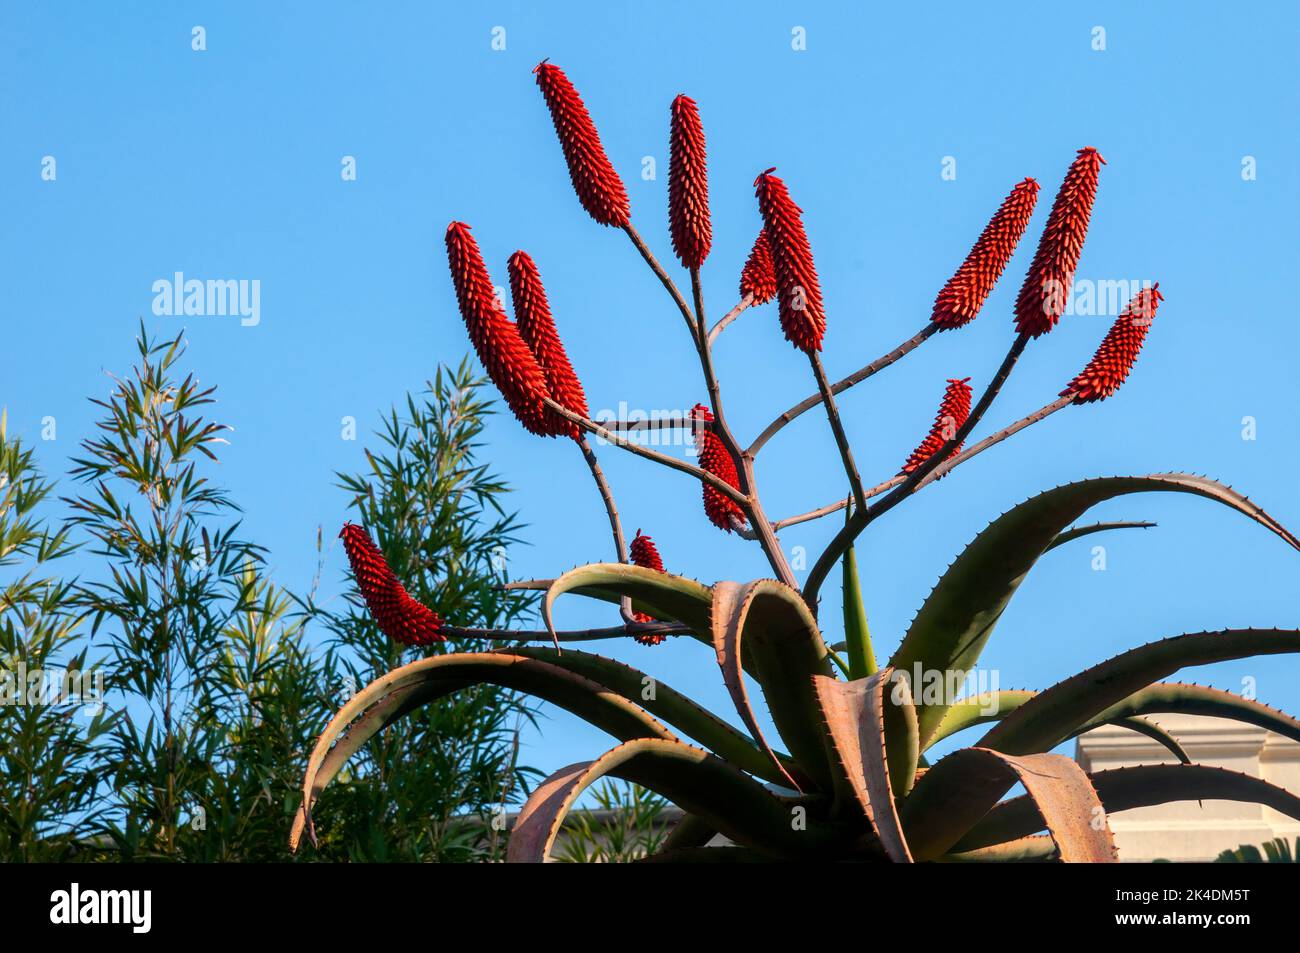 Sydney Australia, red flowerheads of a aloe excelsa or Zimbabwe aloe against blue sky Stock Photo